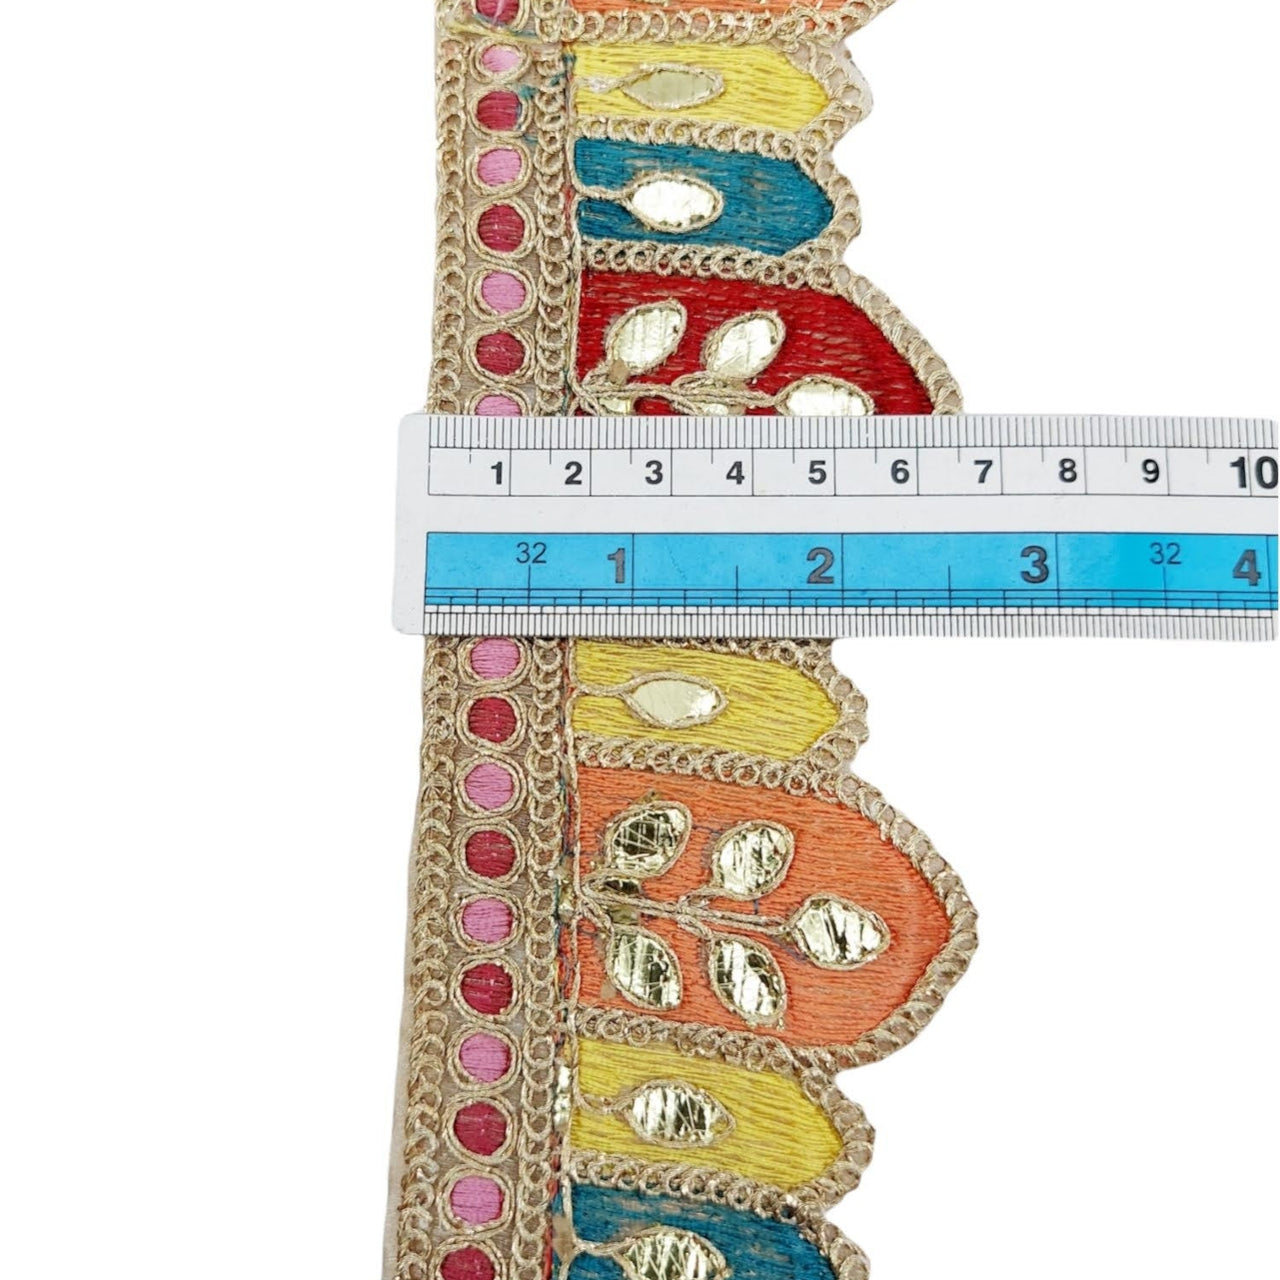 9 Yards Sheer Gold Tissue Fabric Scalloped Lace Trim, Indian Gold Foil Work Embroidery Gota Patti Sari Border Decorative Trim Craft Lace